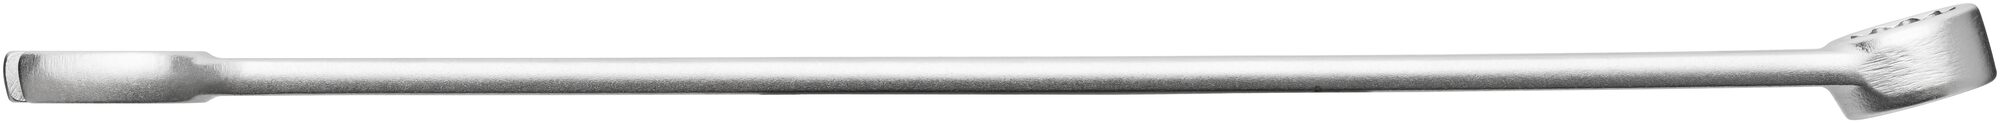 HAZET Ring-Maulschlüssel · extra lang · schlanke Bauform 600LG-19 · Außen Doppel-Sechskant-Tractionsprofil · 19 mm